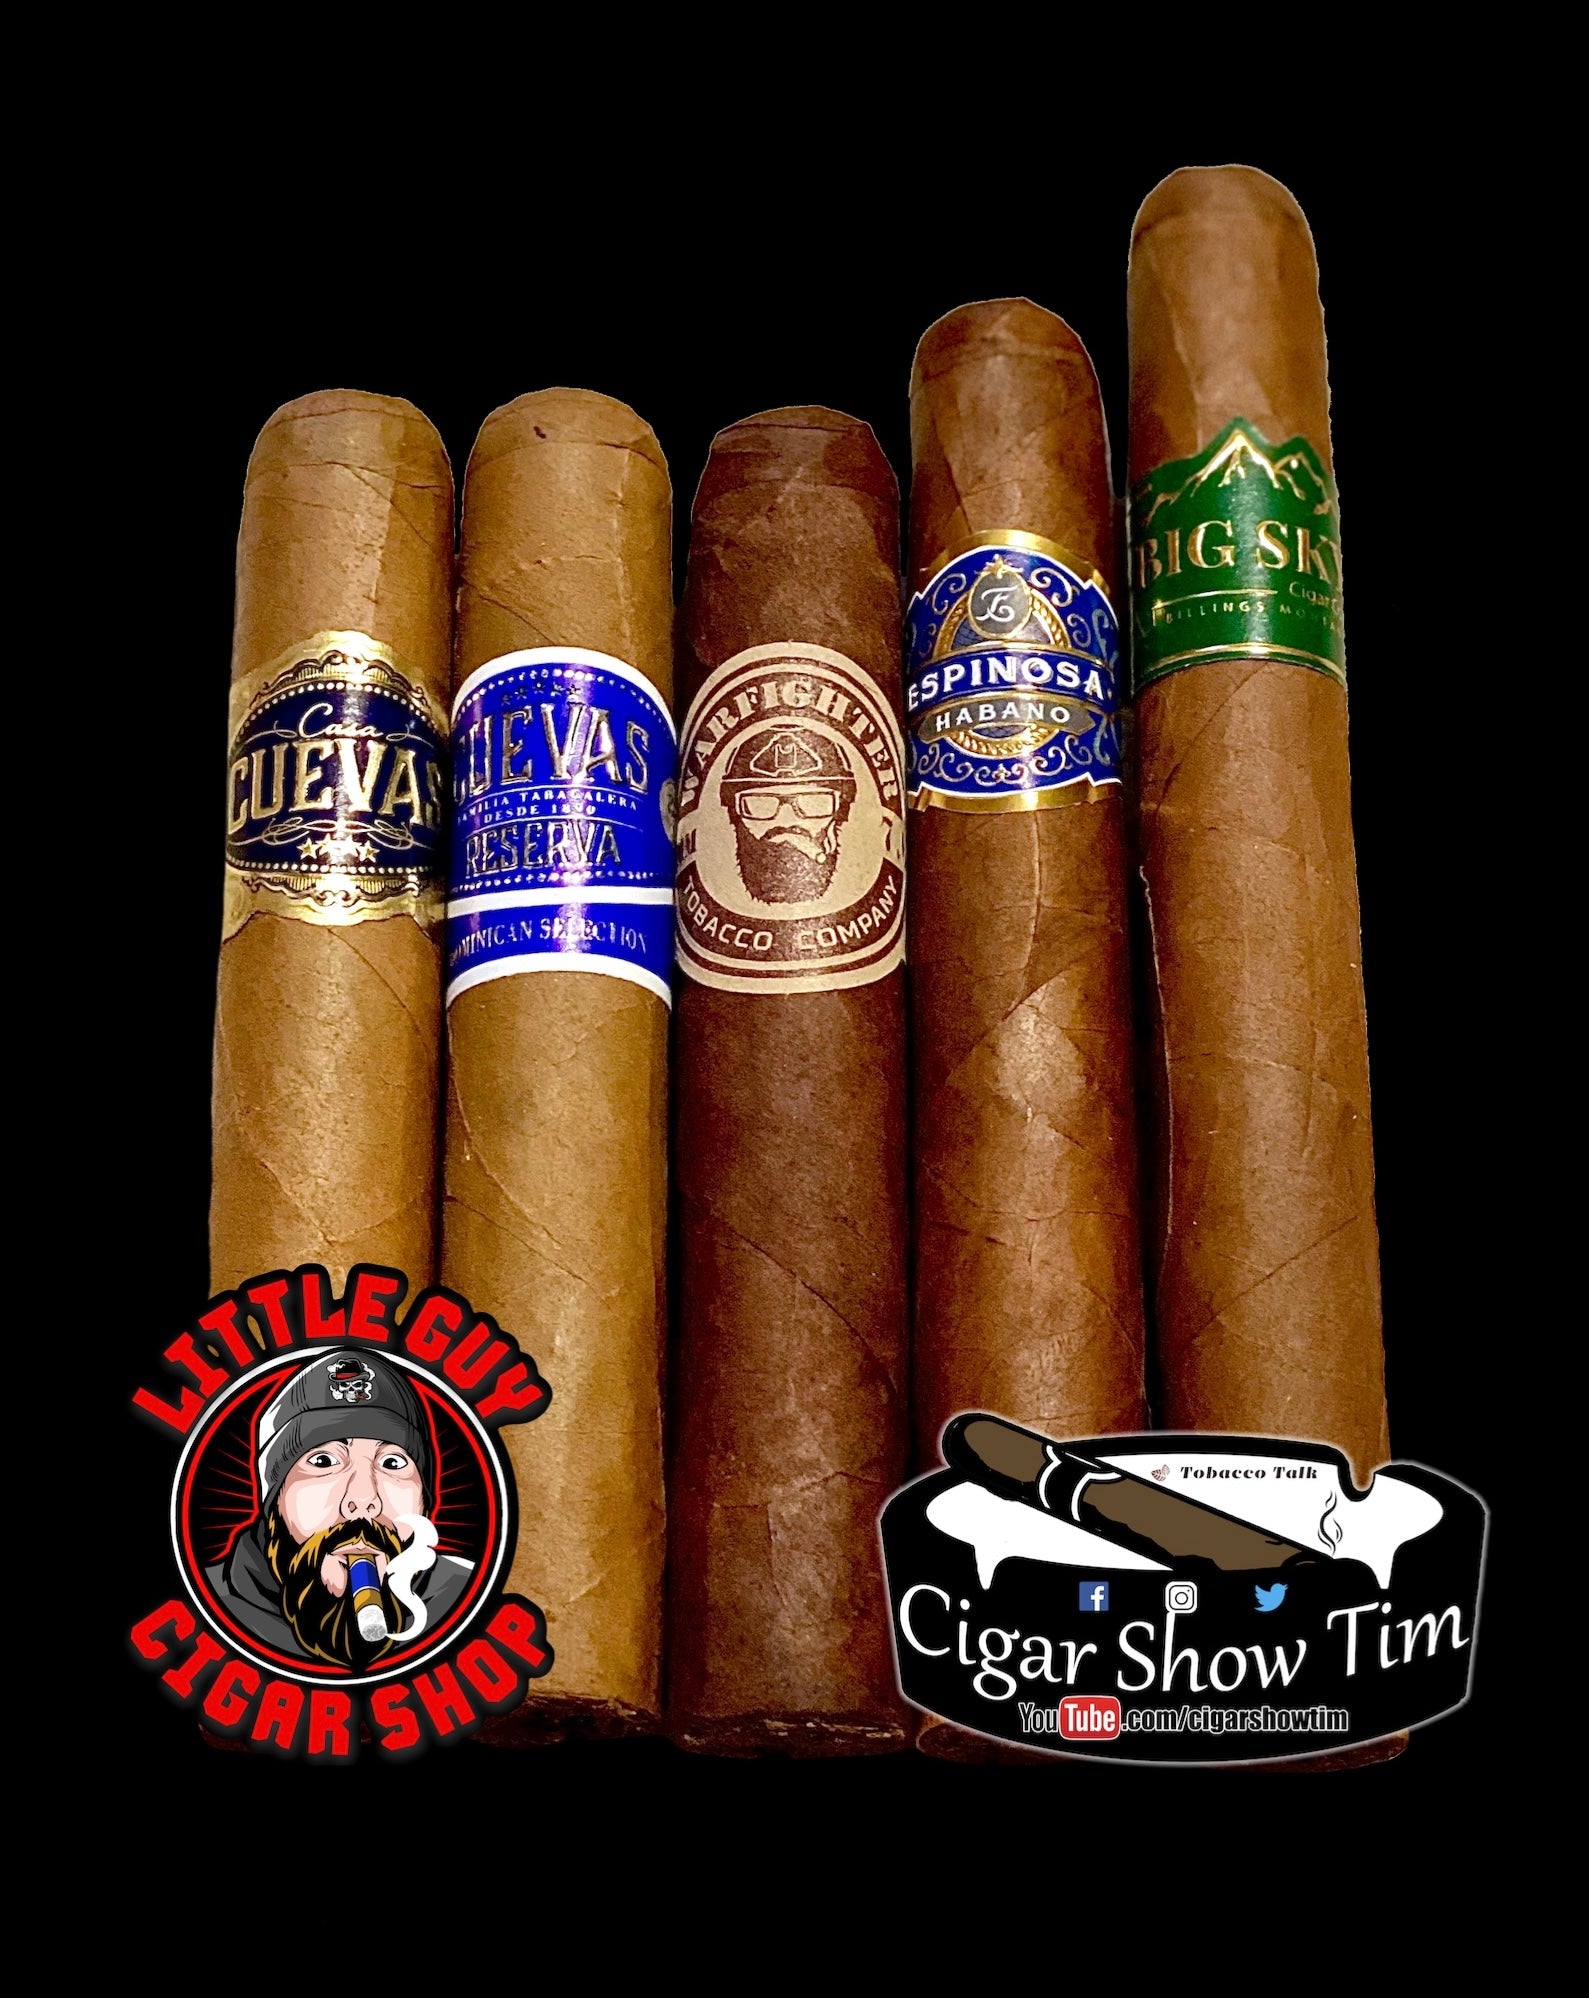 Cigar Show Tim’s Daily Smoke Sampler